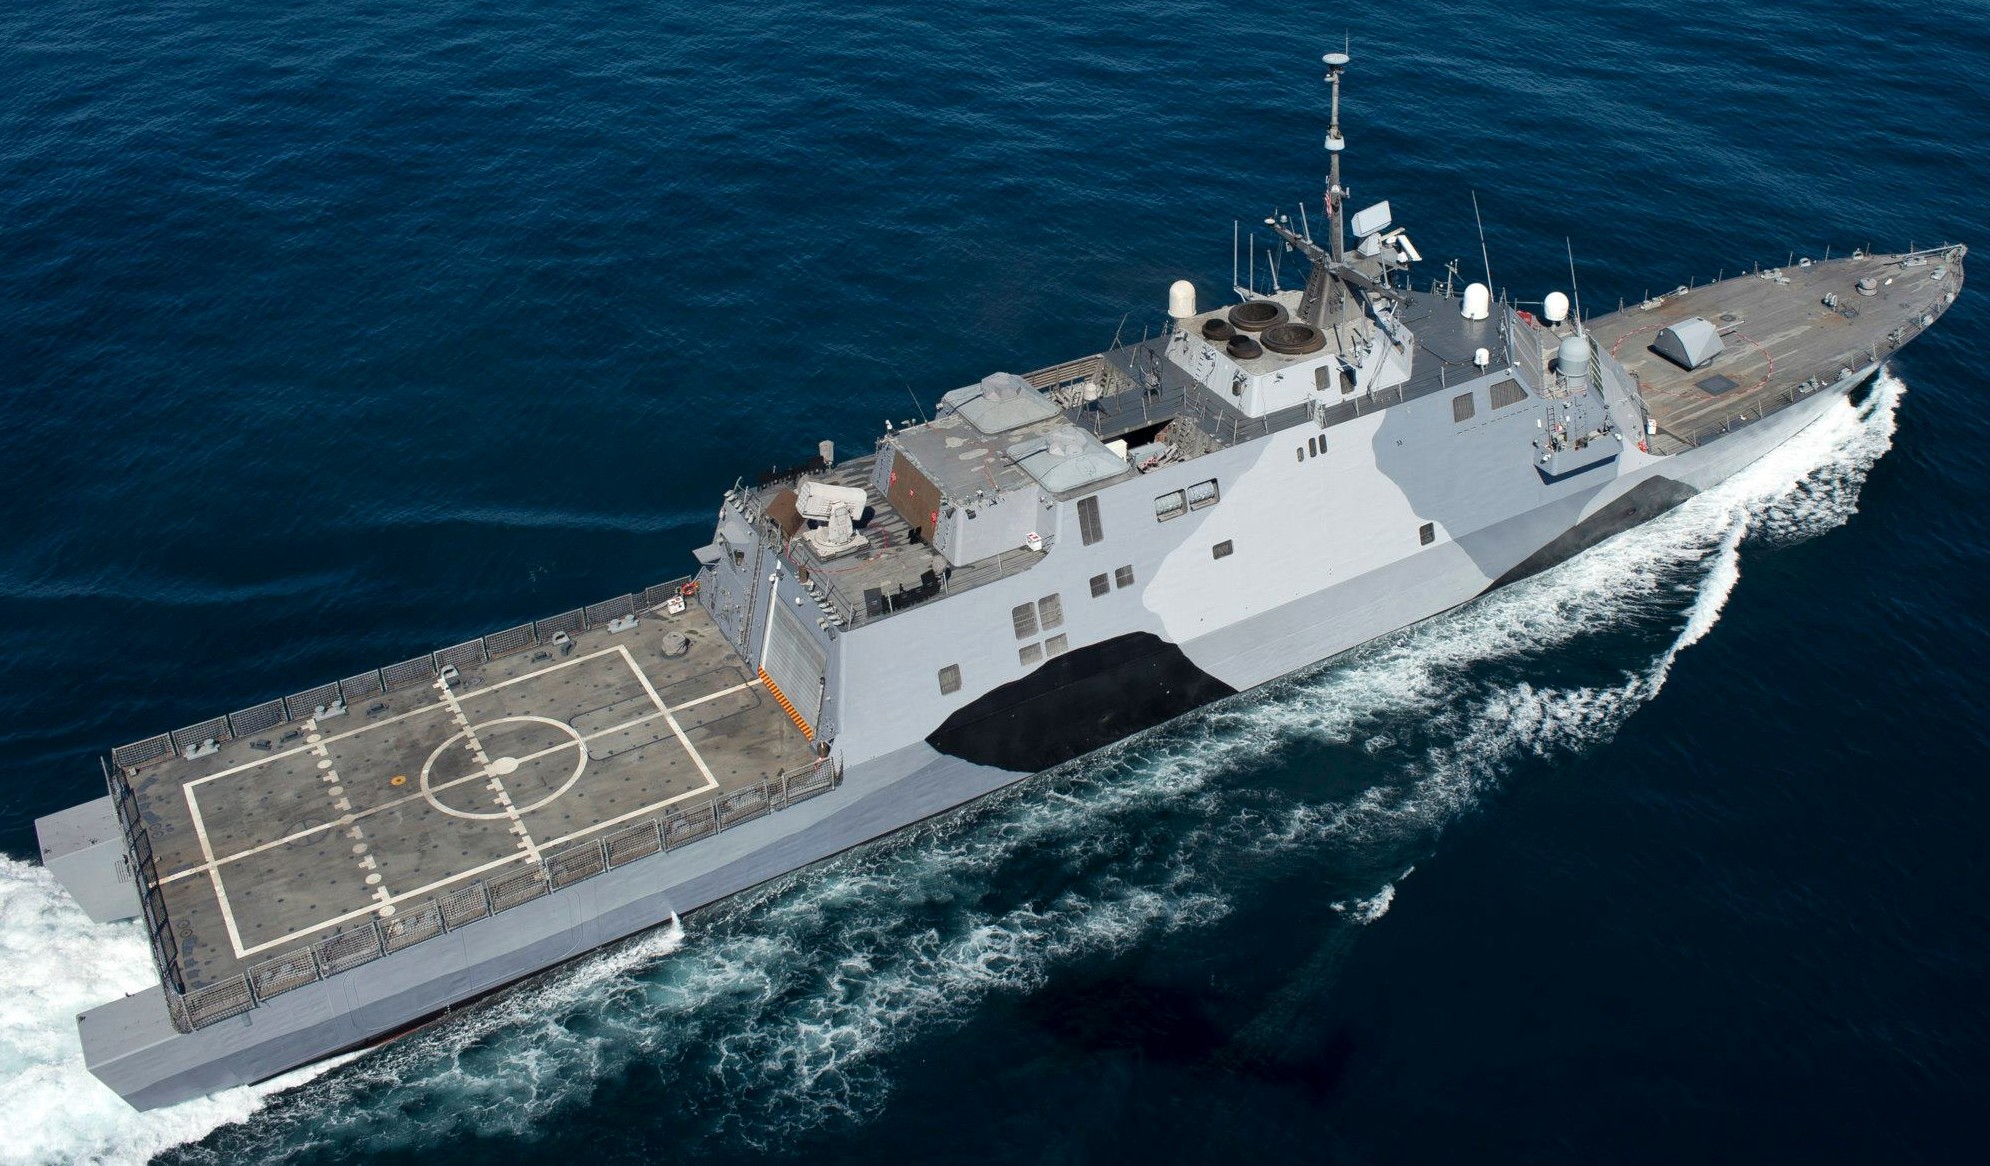 lcs-1 uss freedom class littoral combat ship us navy 55x fincantieri marinette marine lockheed martin